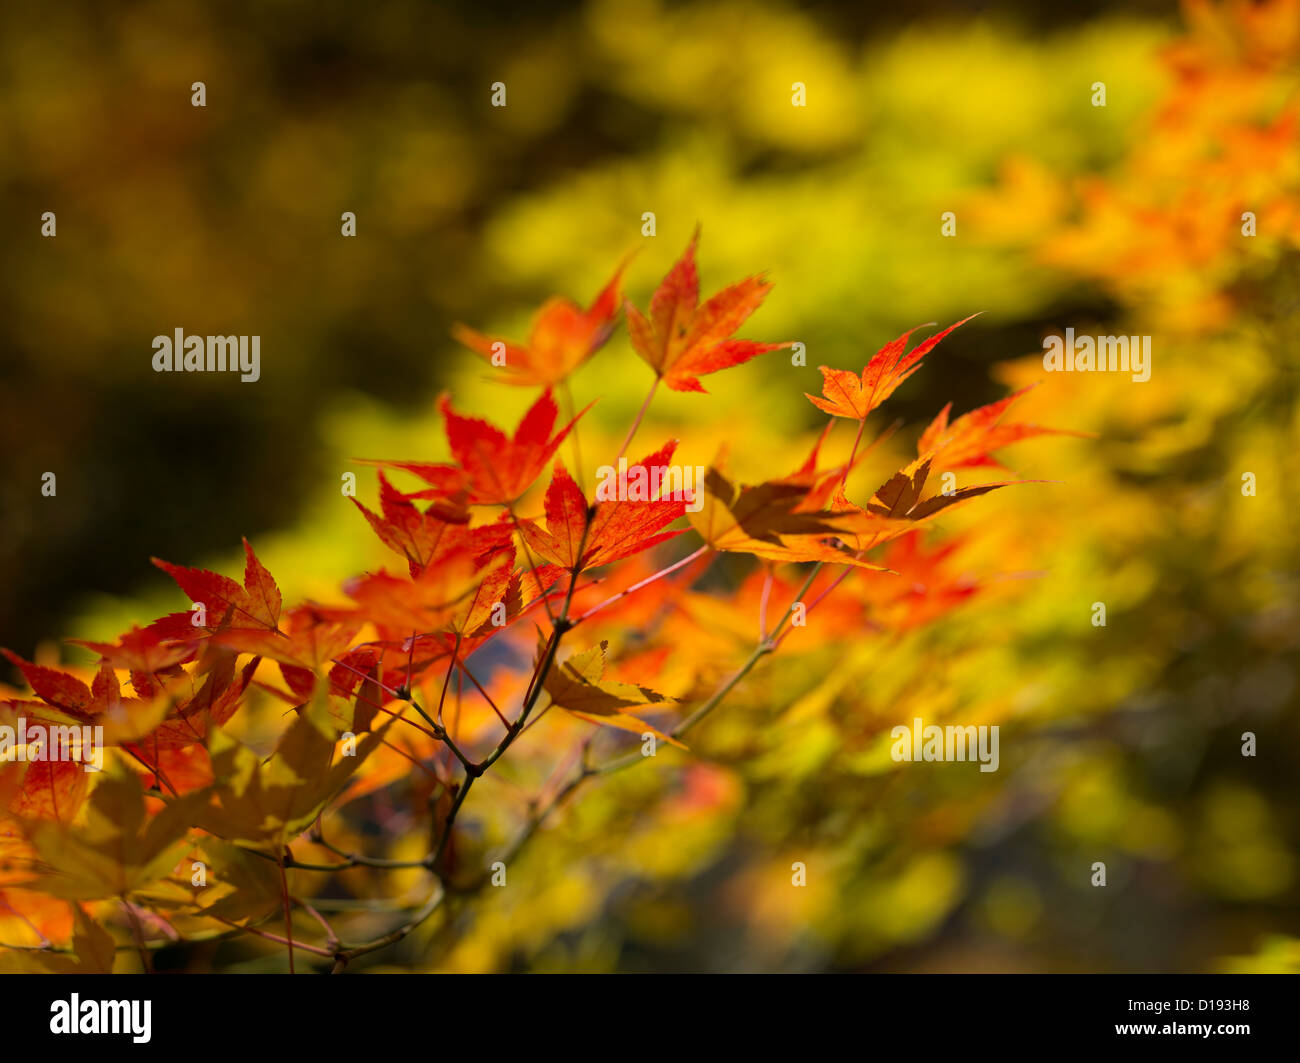 Autumn / Fall colors  leaves / foliage at Ryōan-ji Zen Buddhist temple in Kyoto Japan. Stock Photo